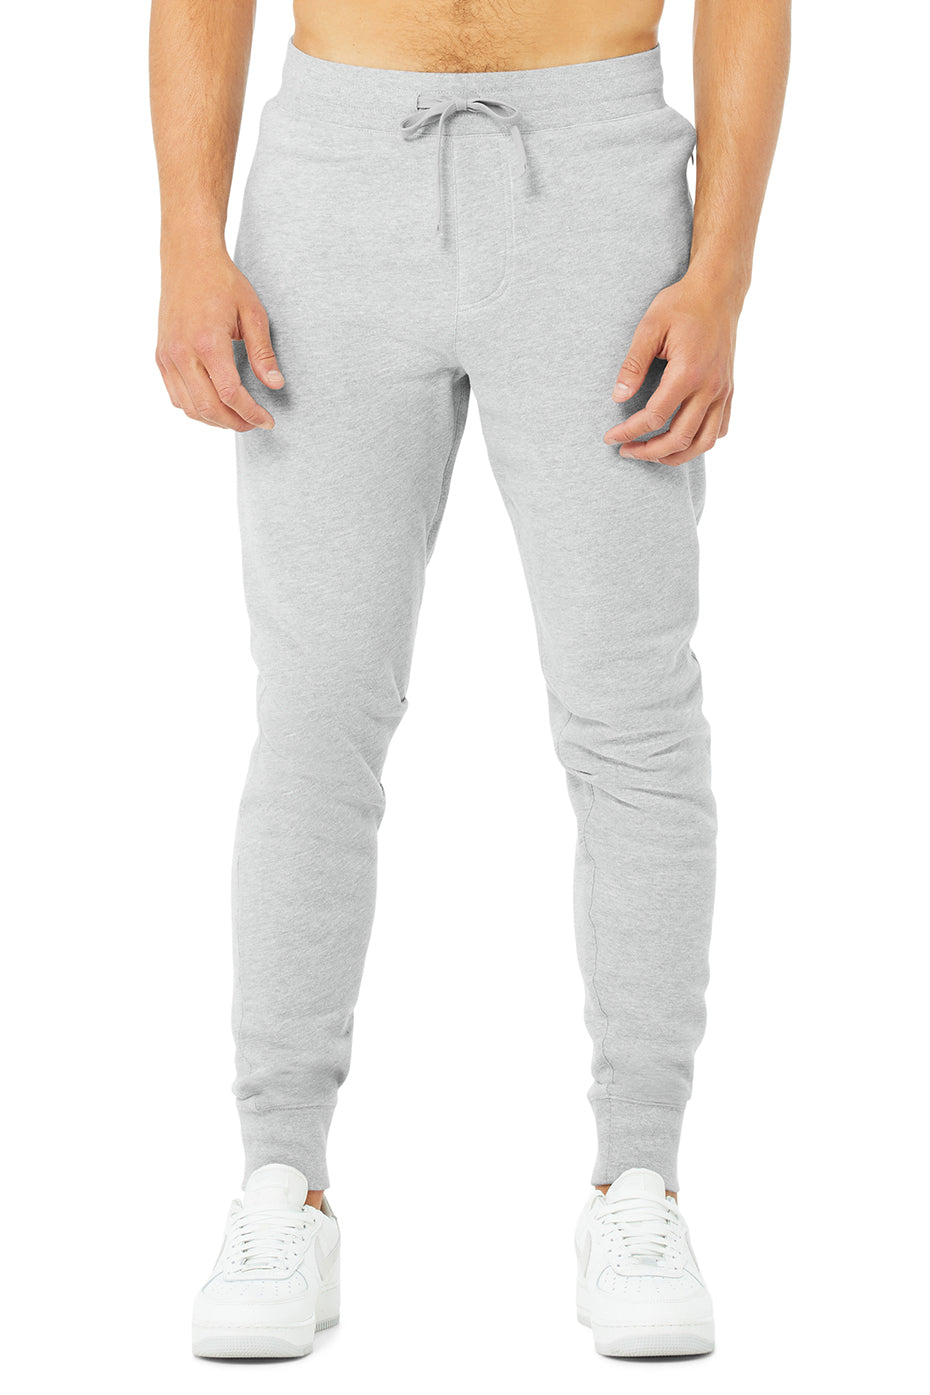 Lean into Lounge, Alo Yoga Muse Ribbed Fleece Sweatpants - Light gray